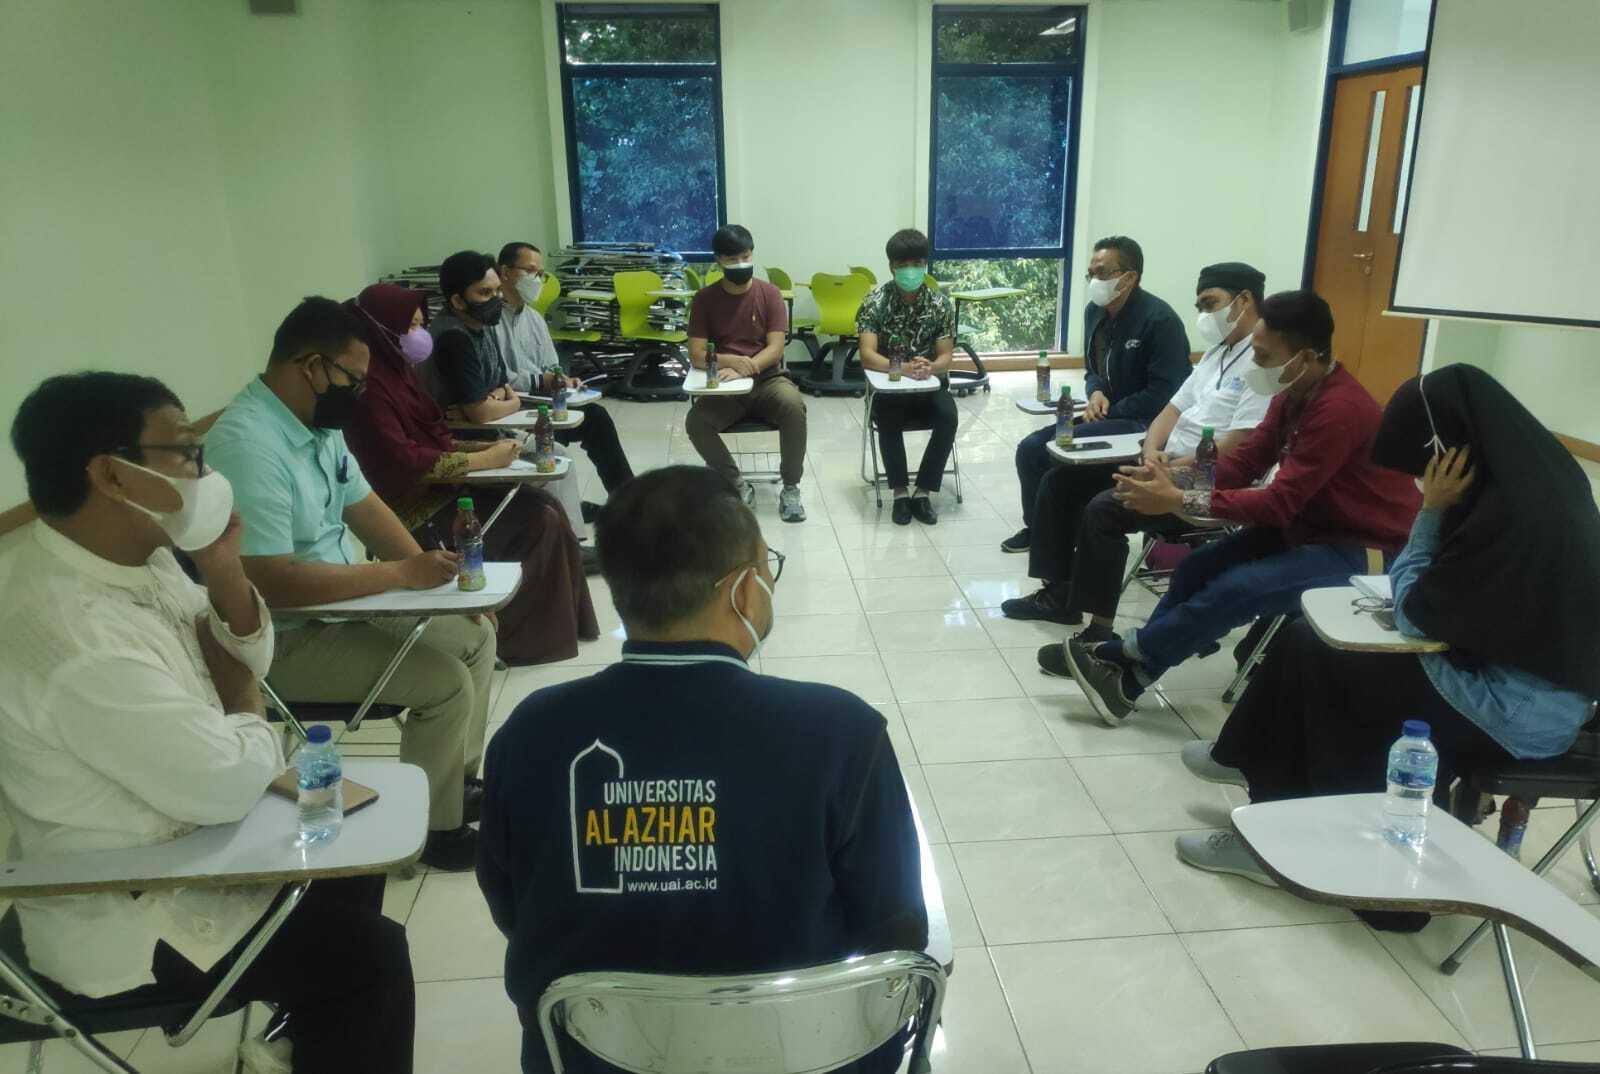 University Al-Azhar Of Indonesia And YBM PLN Met To Discuss UAI Foreign Students Progress